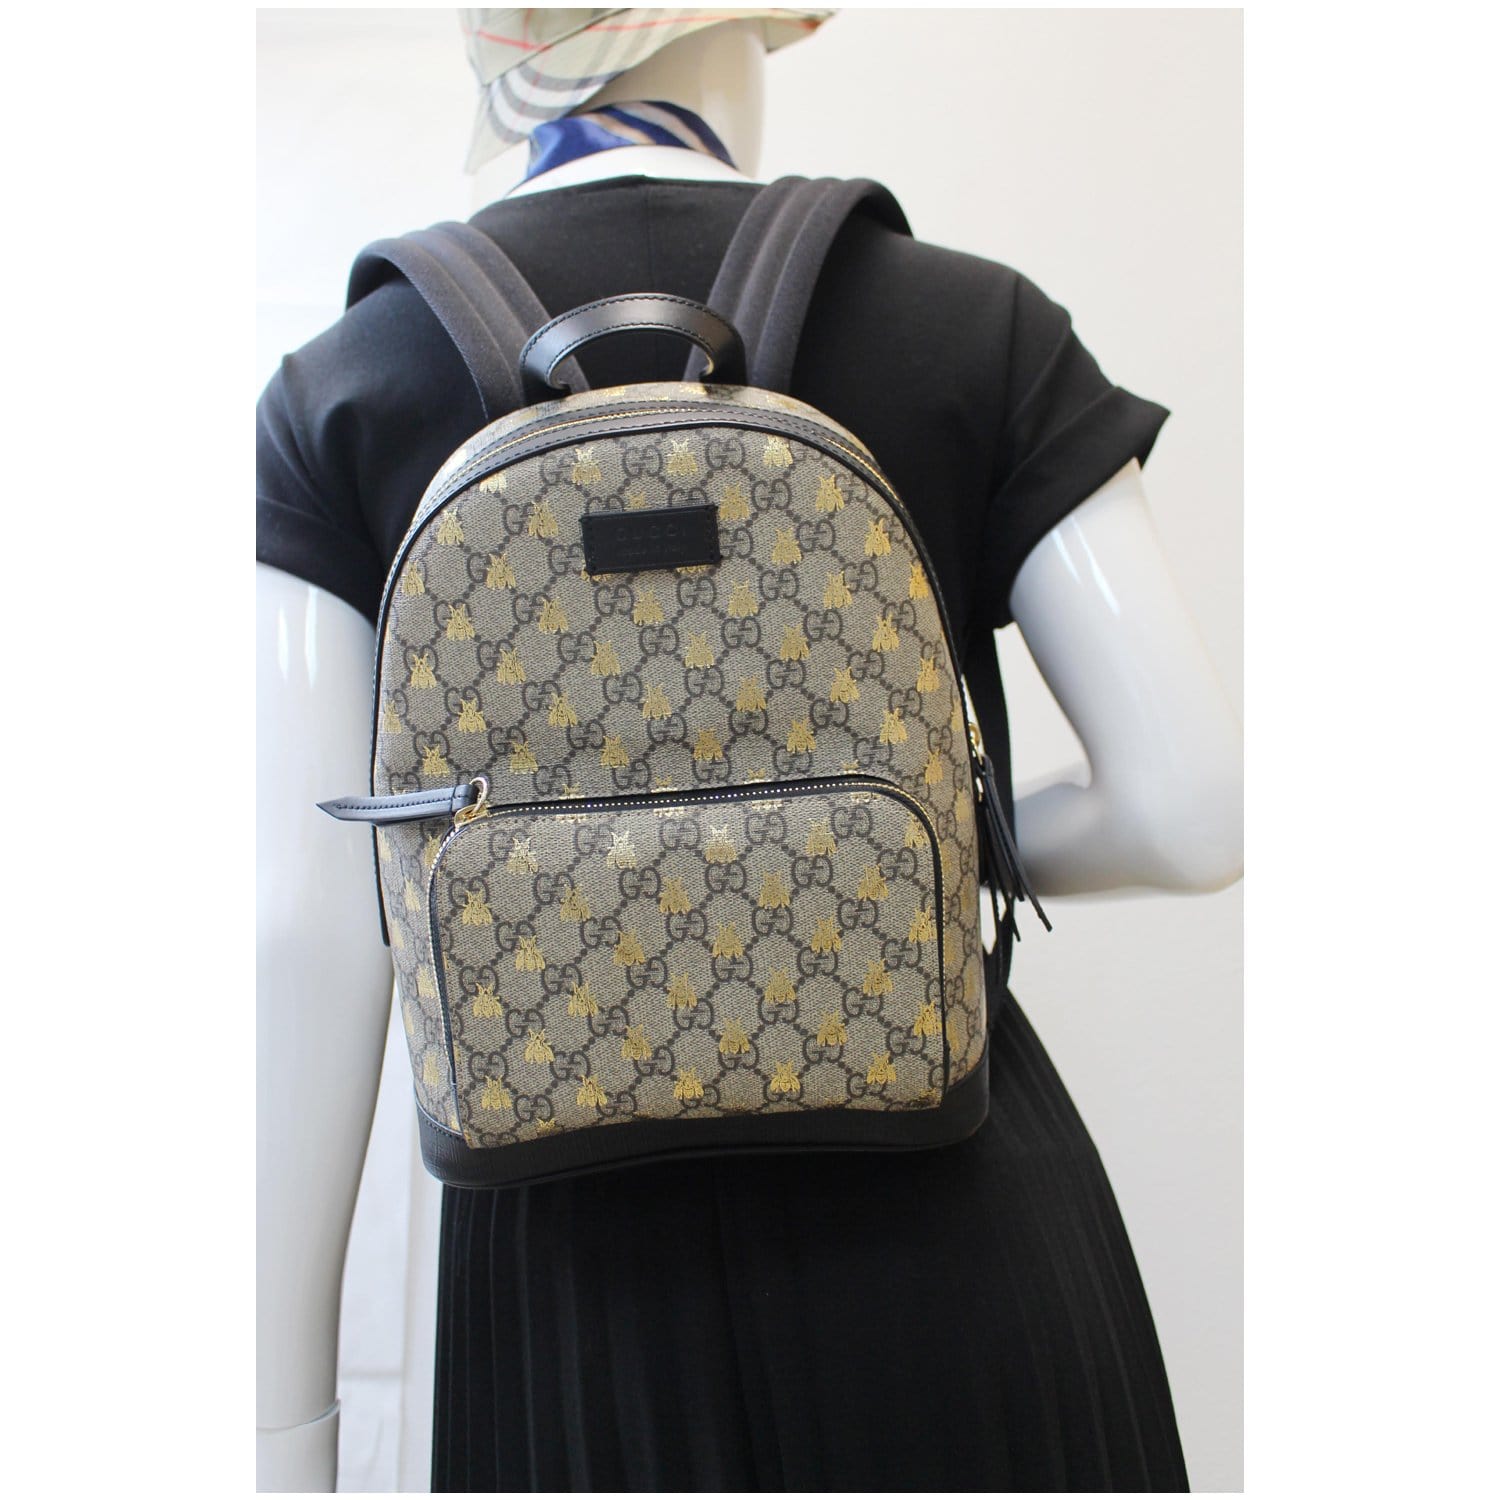 Gucci Small Backpack GG Supreme Beige Black PVC Leather 429020 Rucksack  Women's Men's